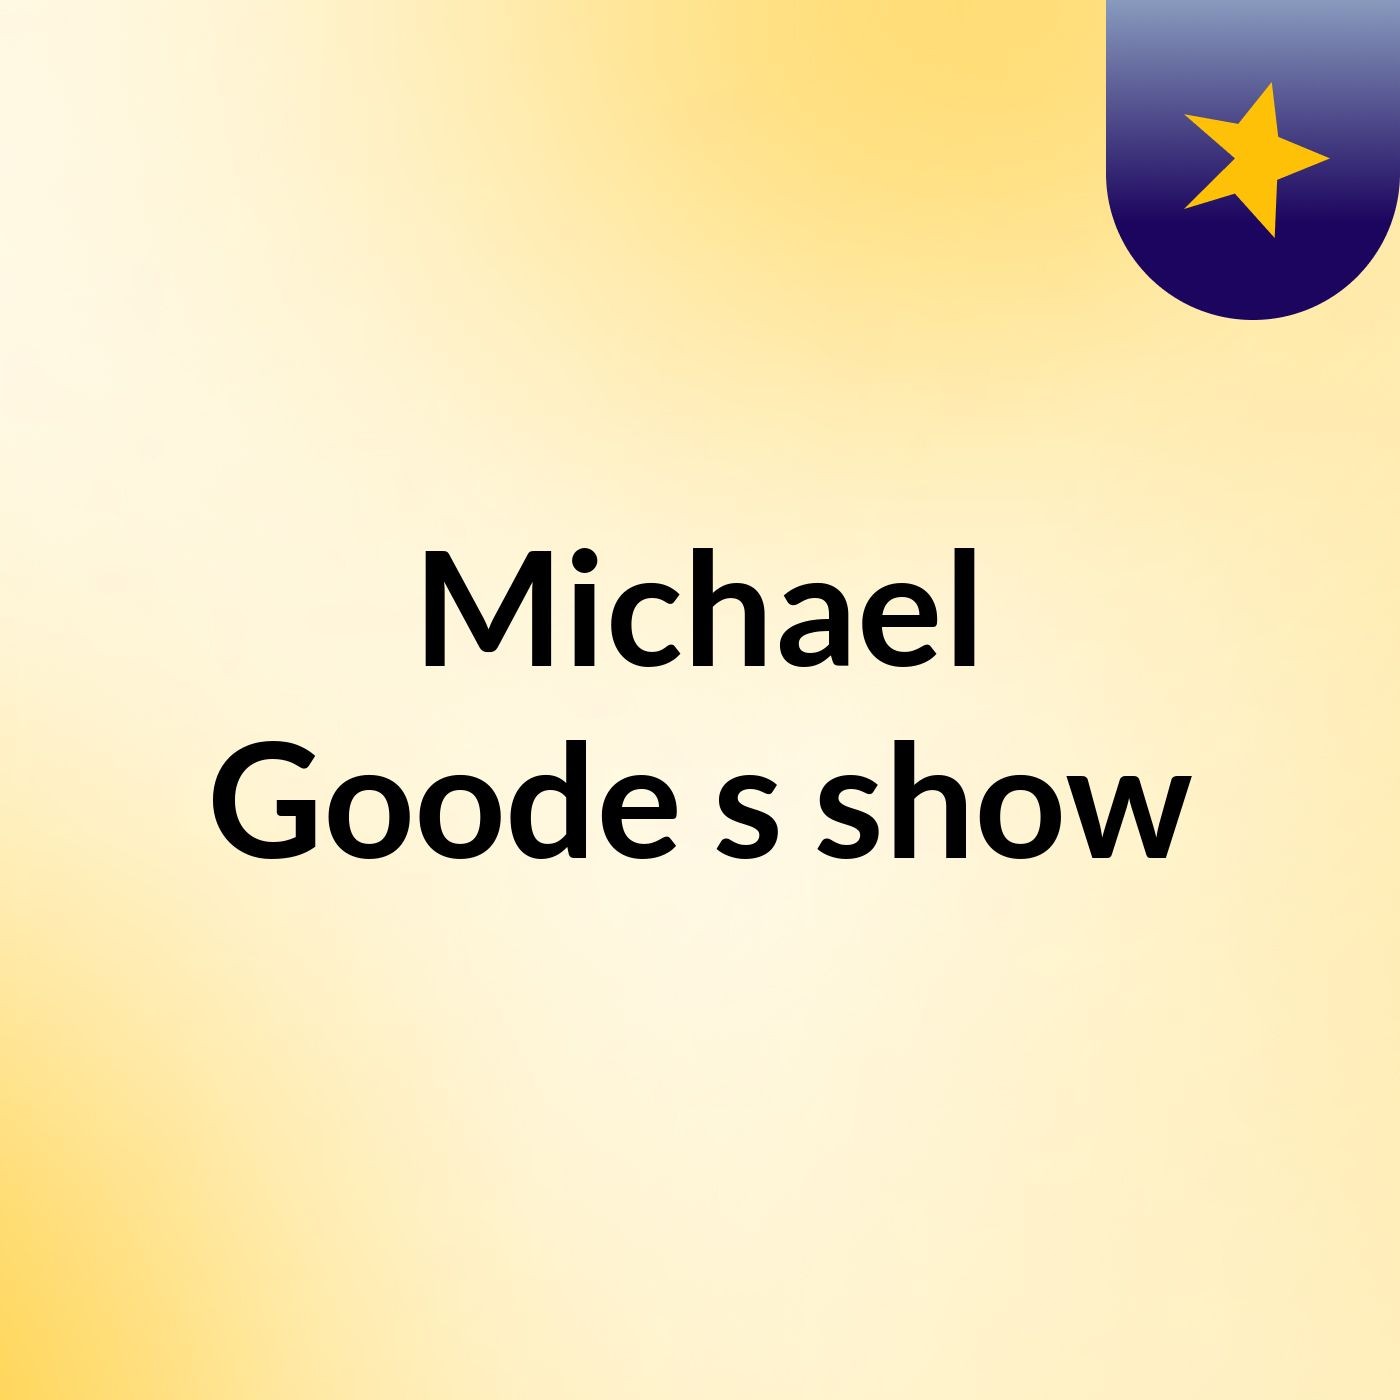 Episode 6 - Michael Goode's show